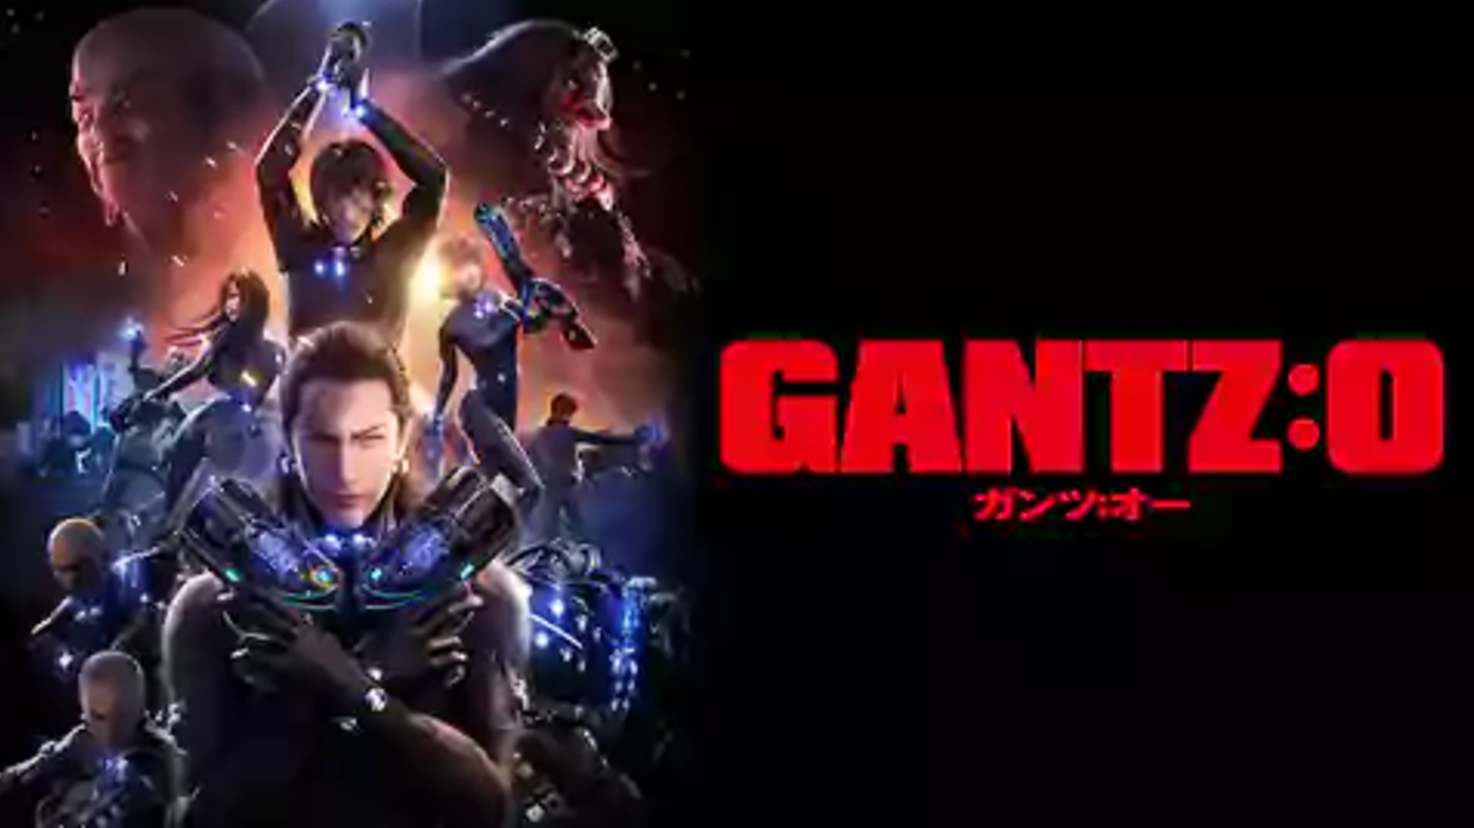 Gantz O ガンツオー はhulu U Next Netflixどれで配信してる ネトナビ